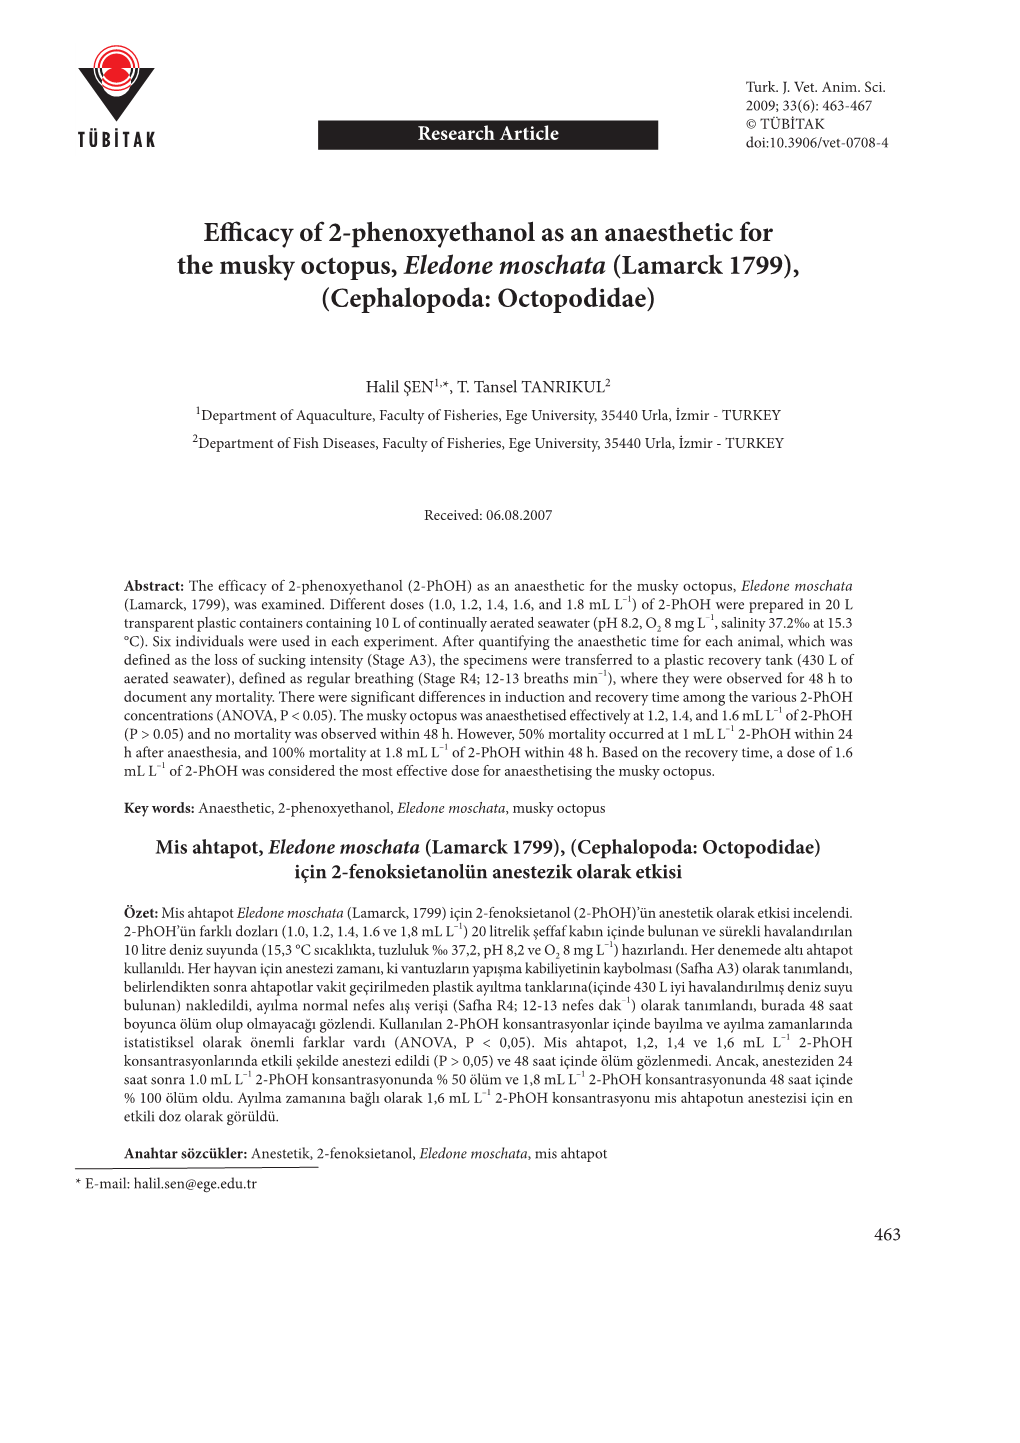 Efficacy of 2-Phenoxyethanol As an Anaesthetic for the Musky Octopus, Eledone Moschata (Lamarck 1799), (Cephalopoda: Octopodidae)